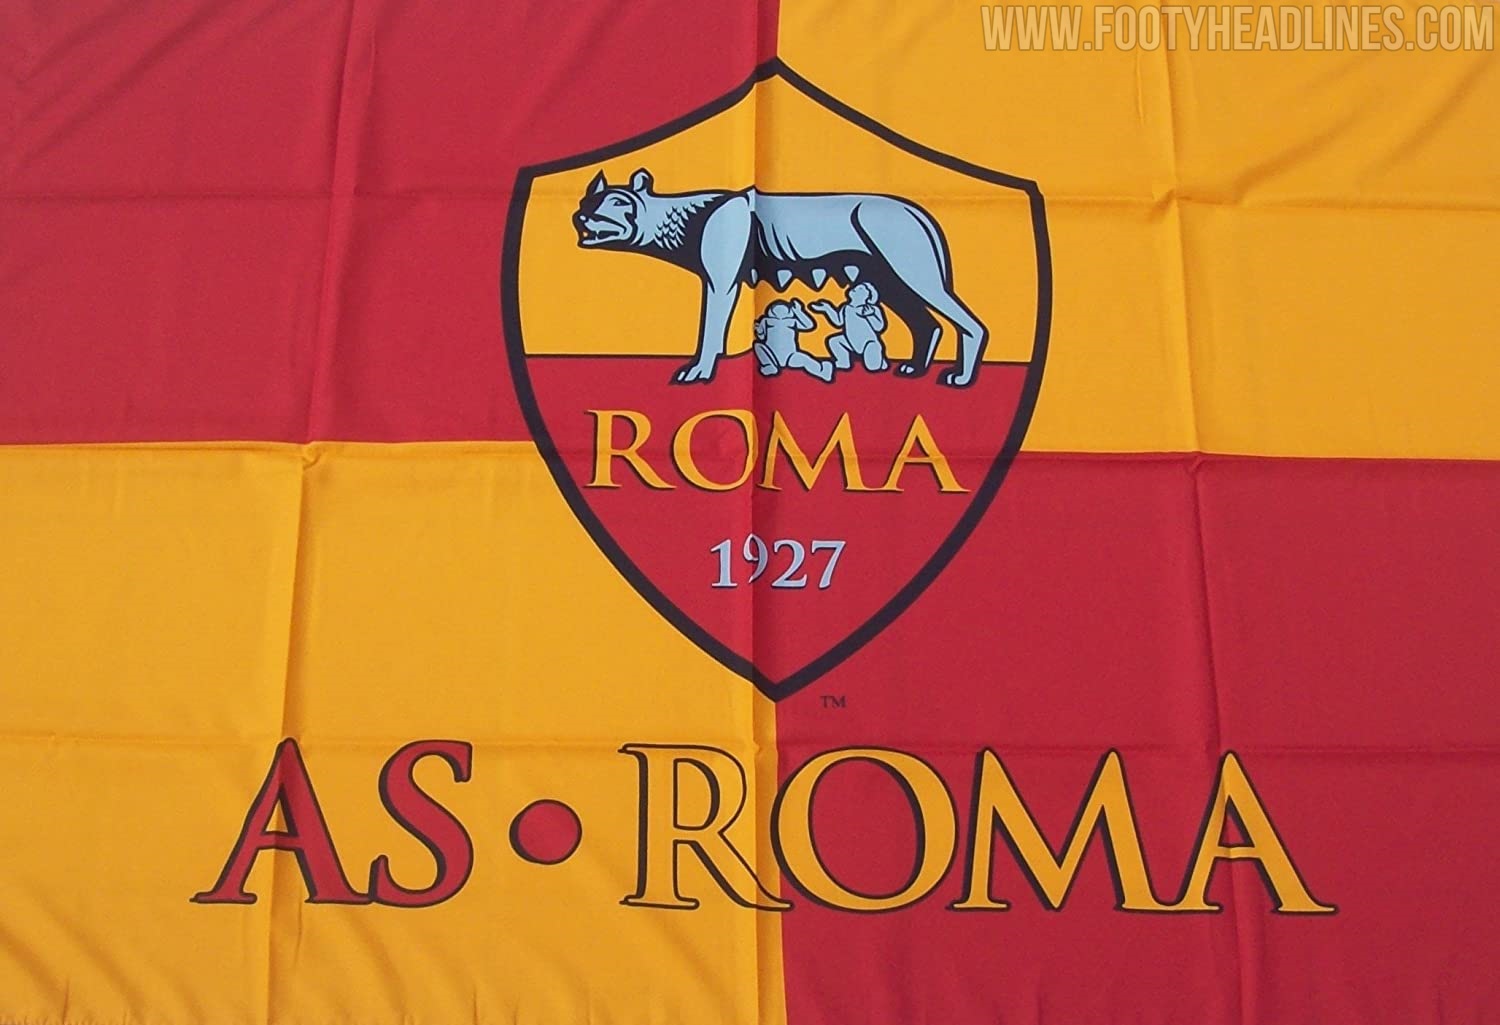 All-New AS Roma 2020 Branding Revealed - Footy Headlines